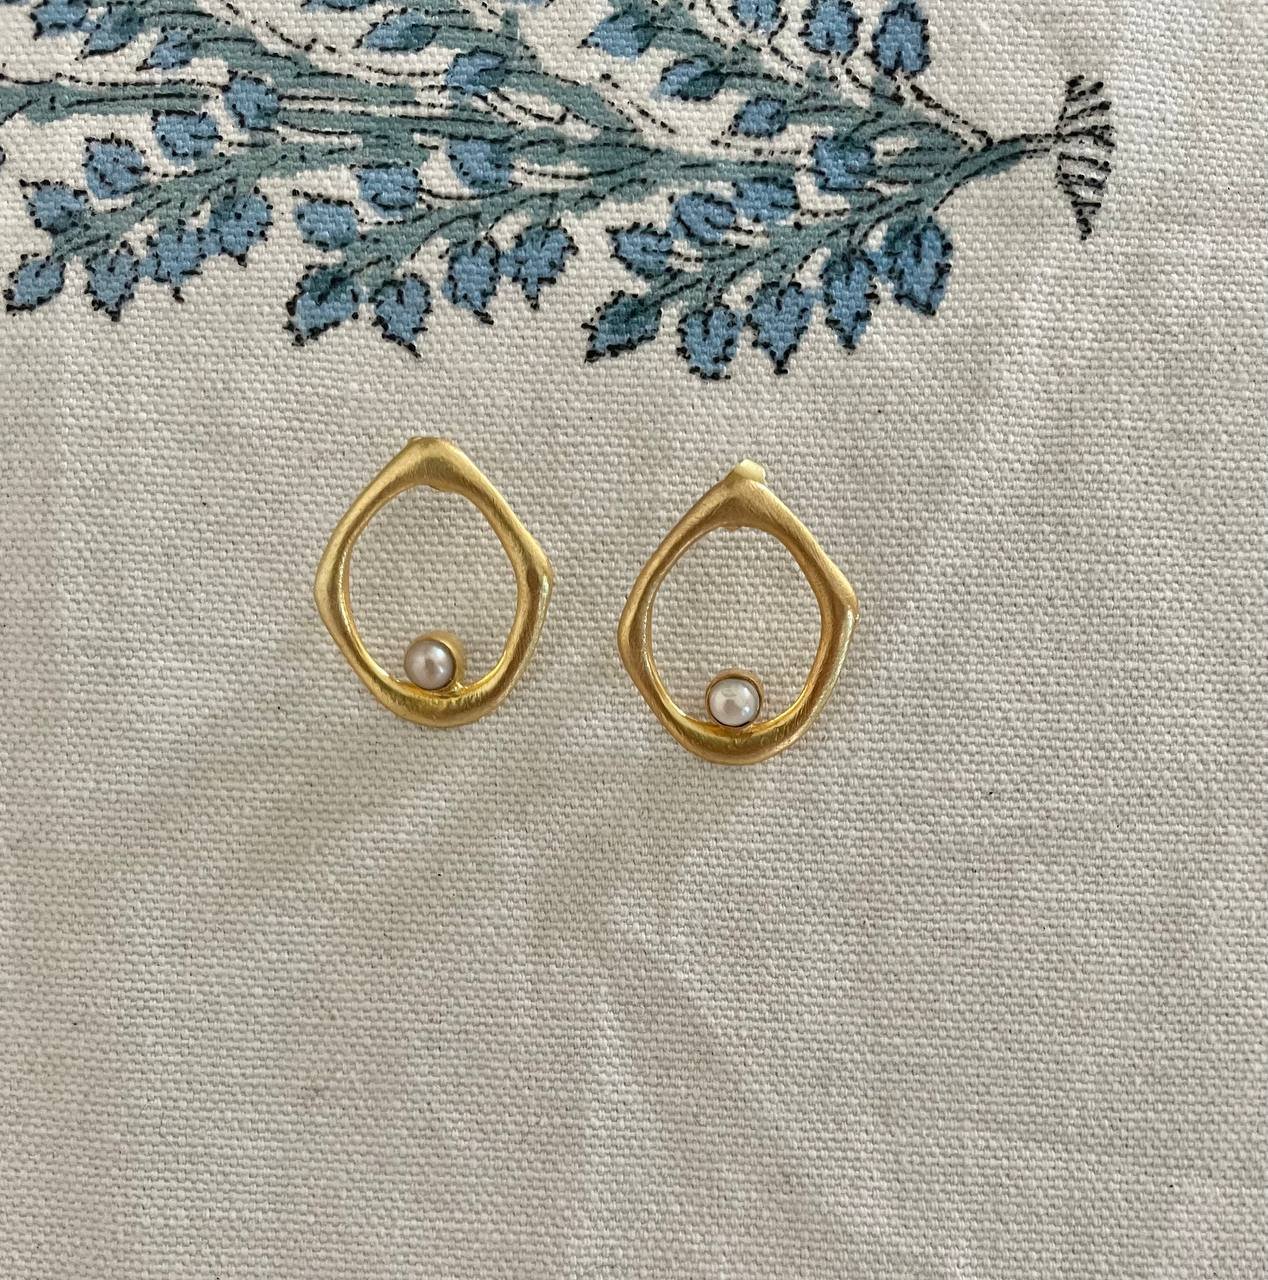 92.5 Sterling Silver Earrings Semi Precious Amethyst Gemstone Stud Earrings